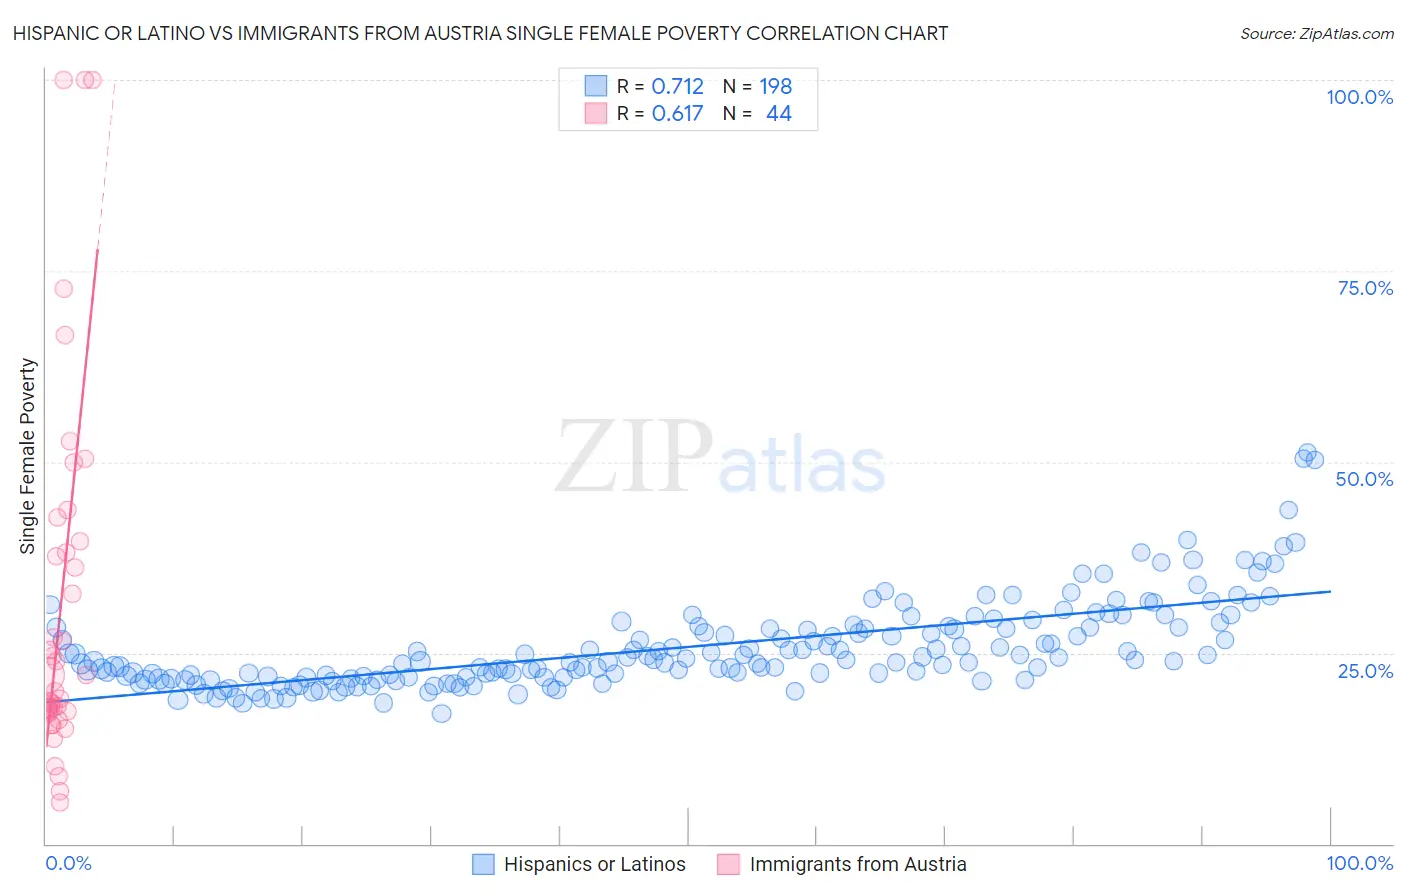 Hispanic or Latino vs Immigrants from Austria Single Female Poverty